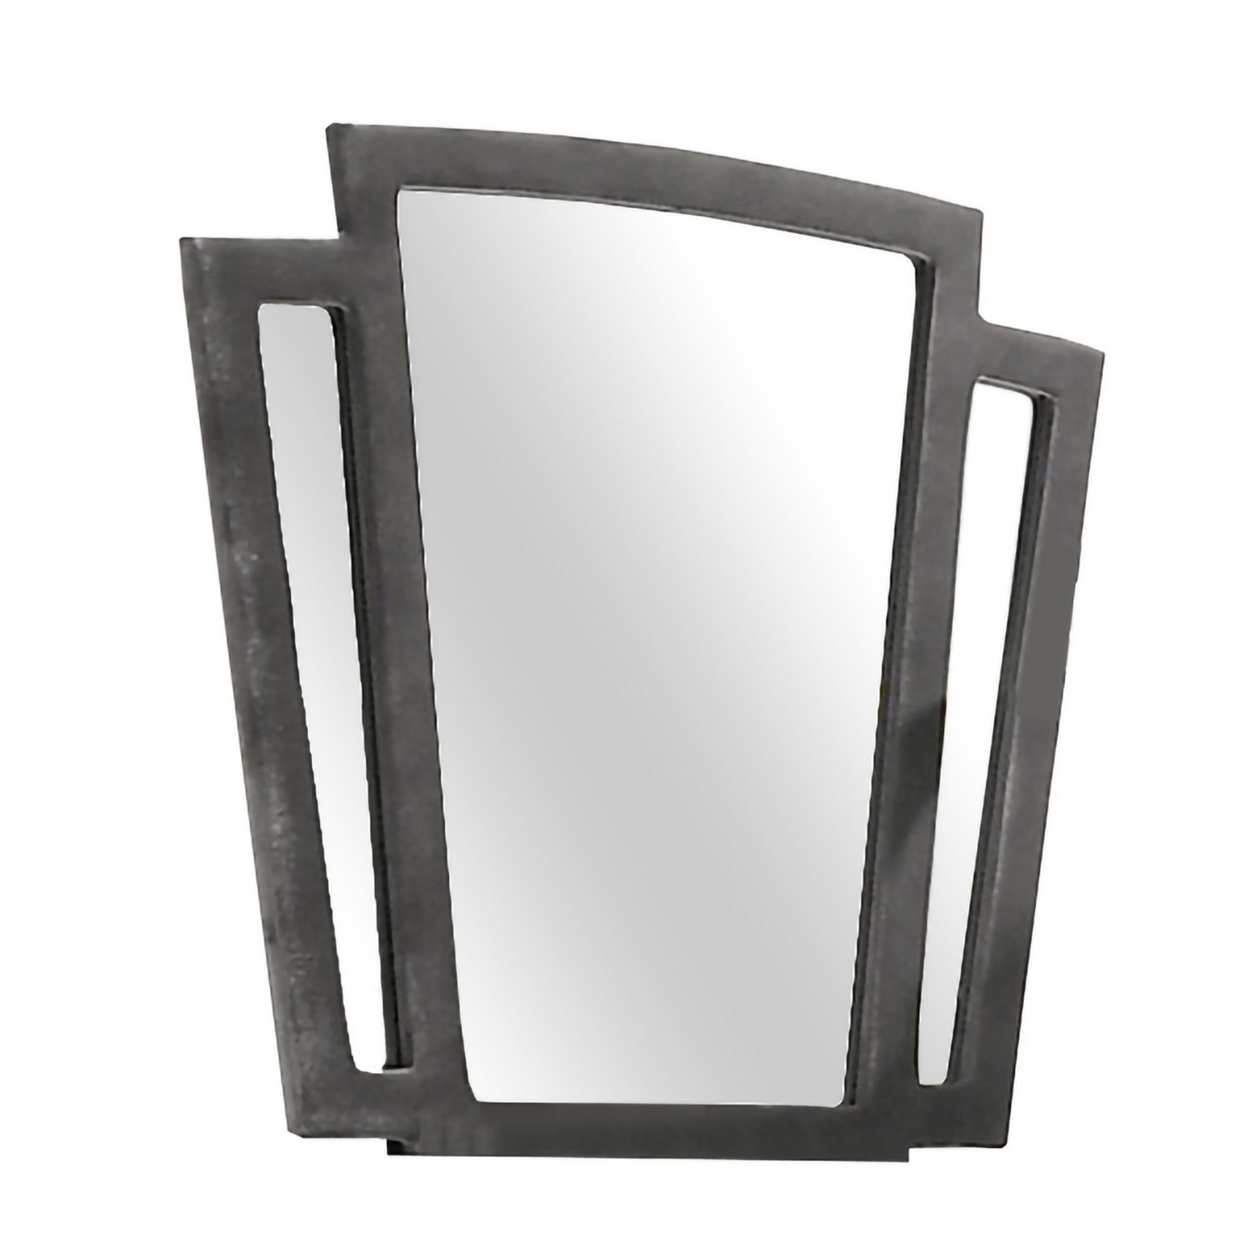 Tapered Fabric Frame Mirror With Mounting Hardware, Dark Gray- Saltoro Sherpi